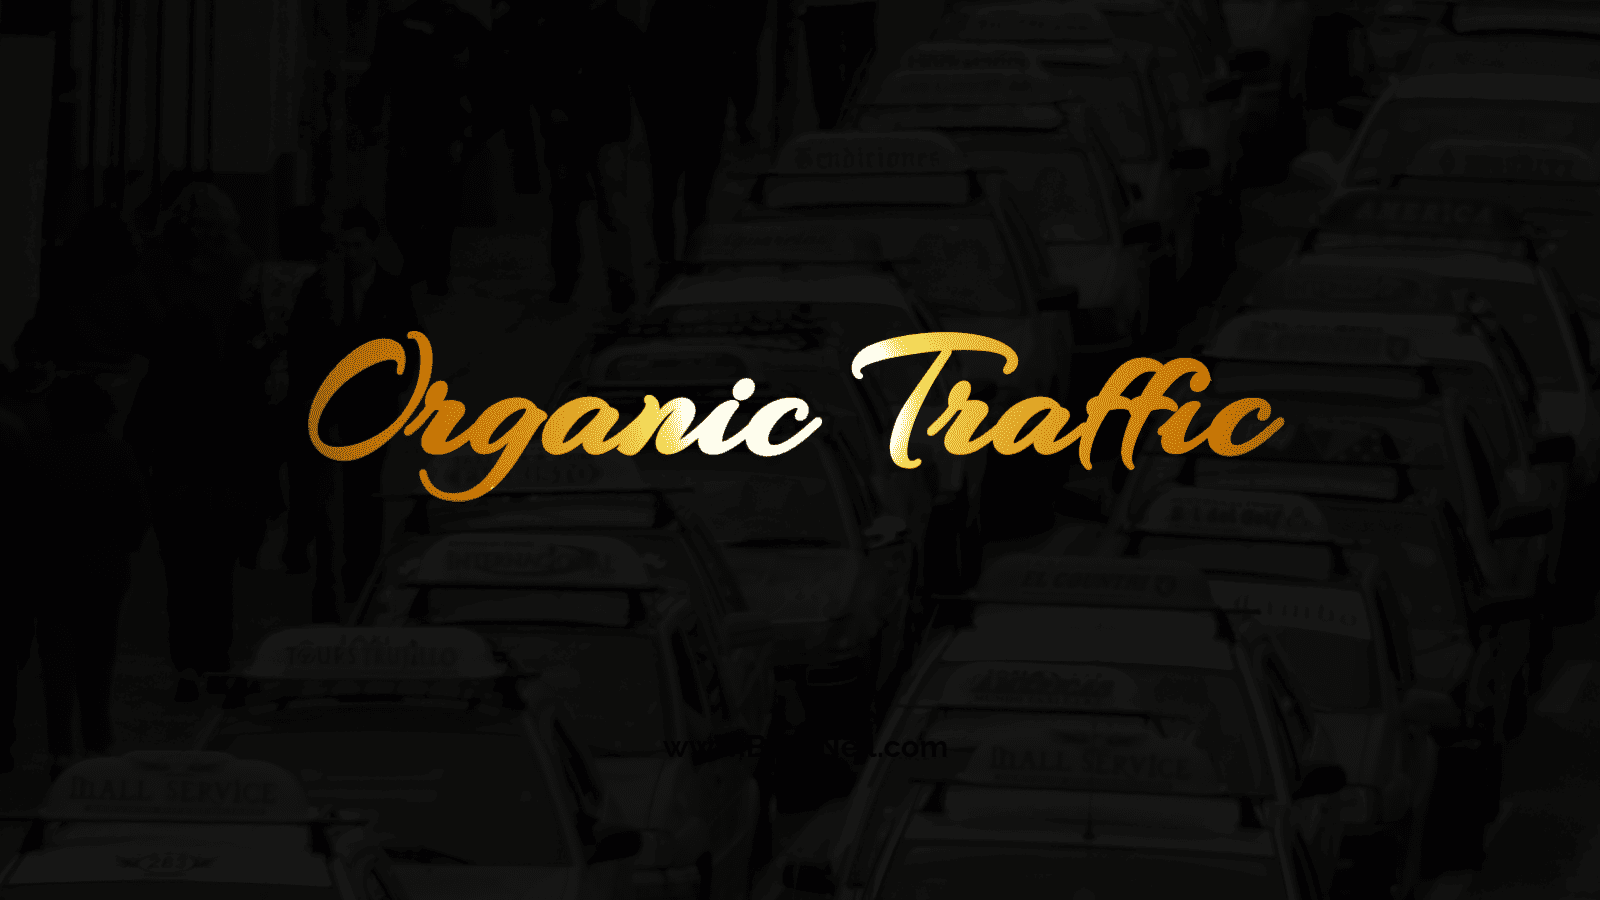 cars in traffic to illustrate organic traffic